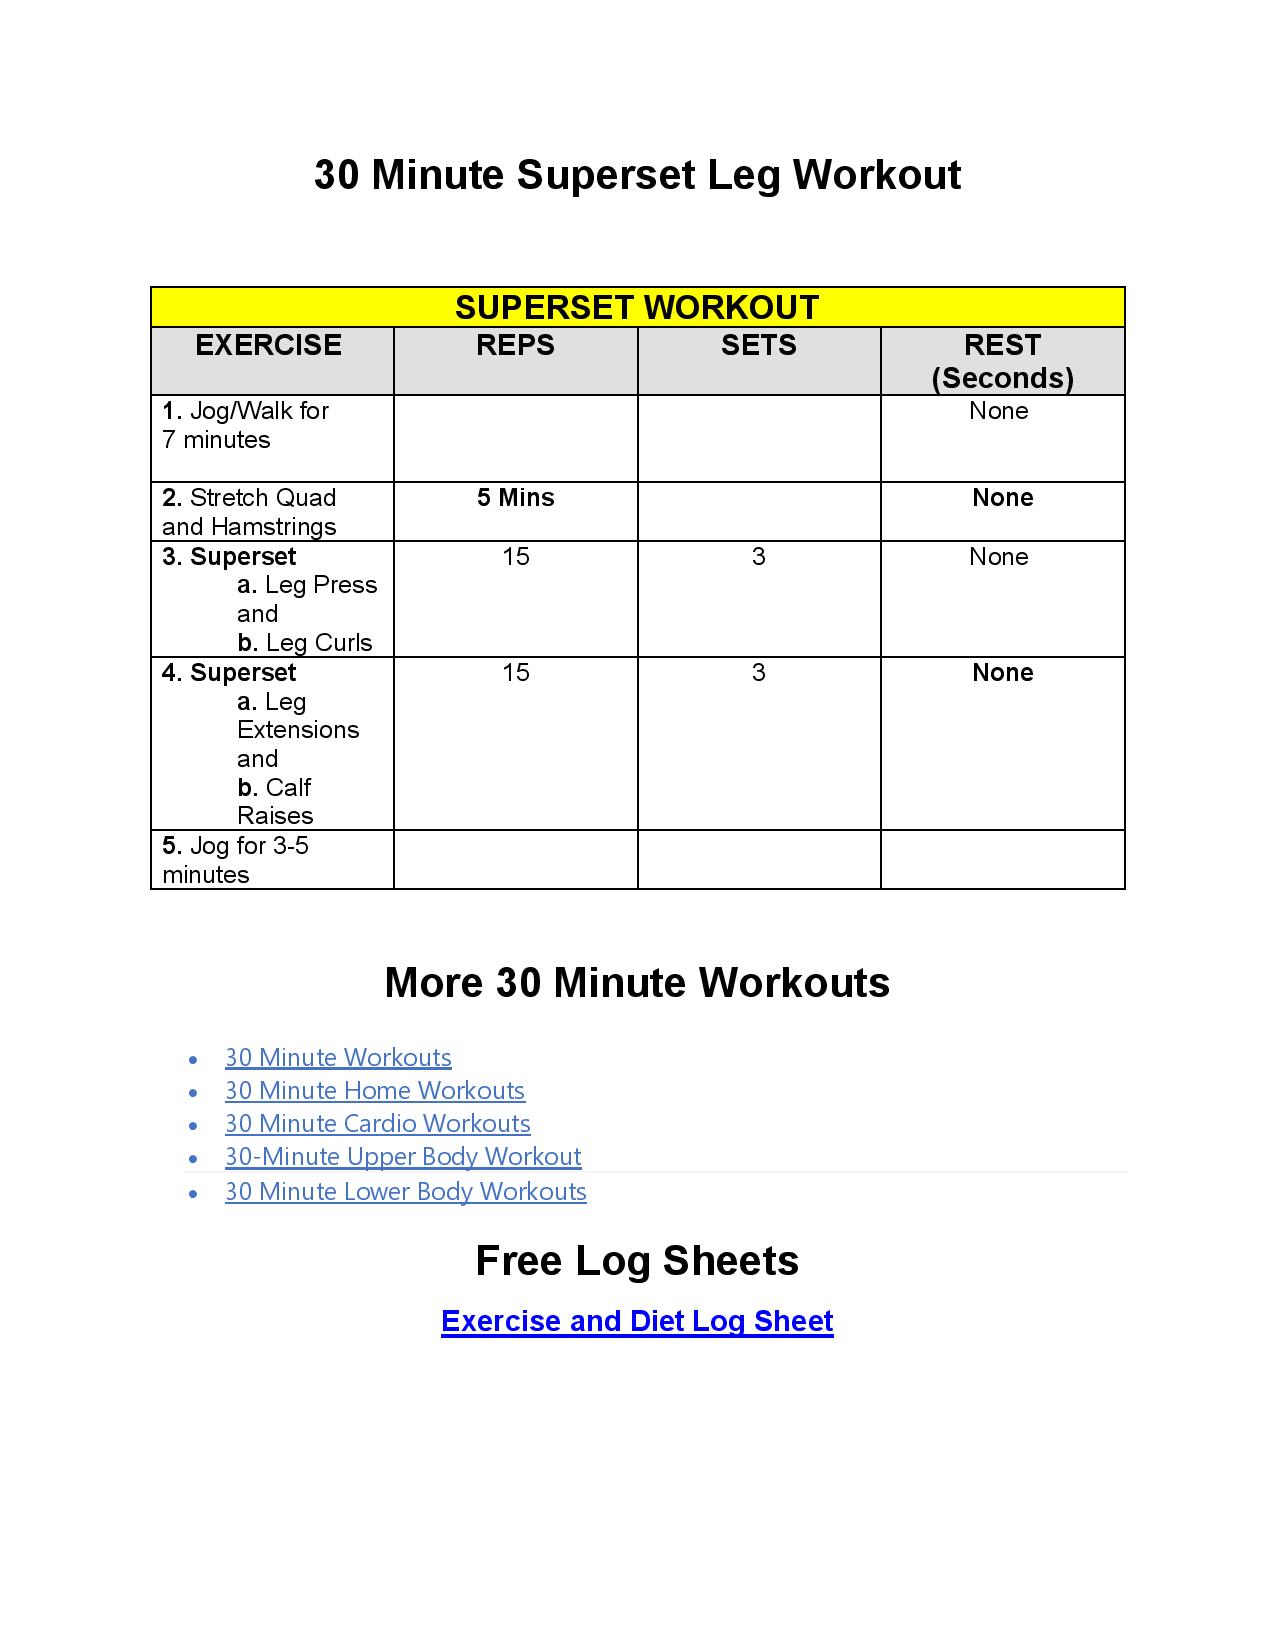 30 minute leg superset workout sample pdf.